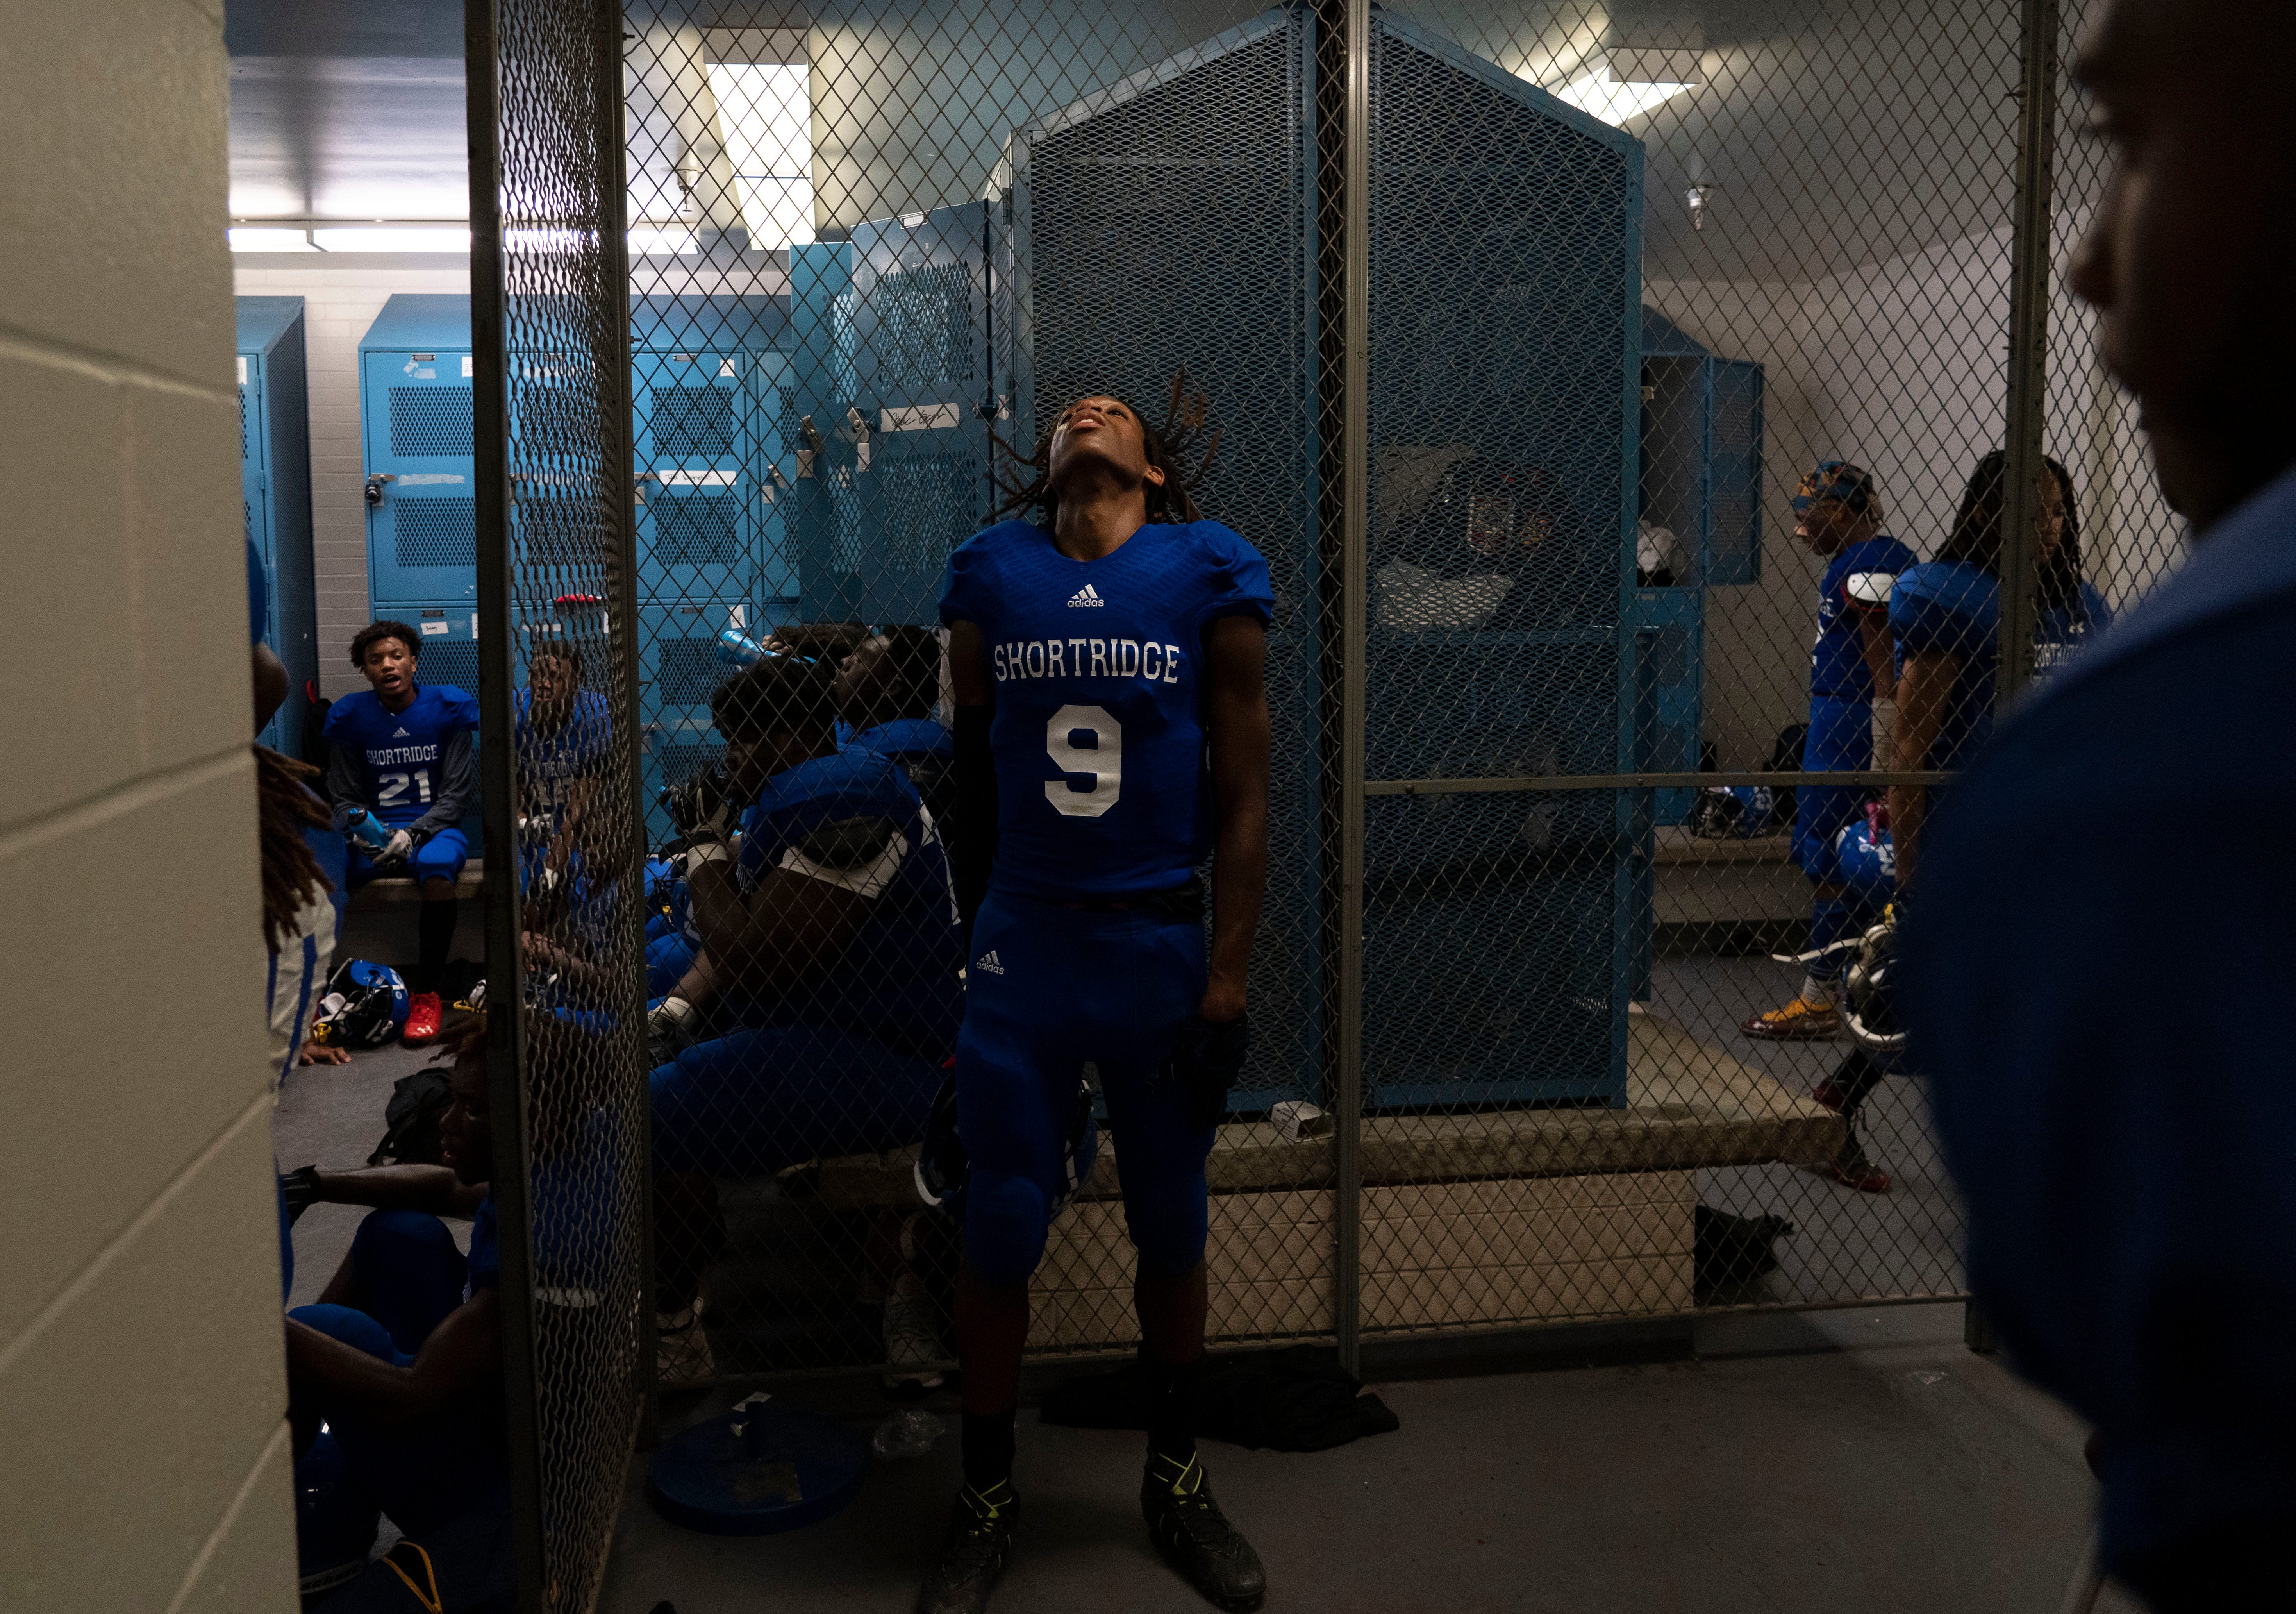 Malachi Flournoy (9), prepares to take the field again during halftime Friday, Aug. 26, 2022, at Shortridge High School in Indianapolis. Shortridge shutout Indianapolis Washington 26-0.